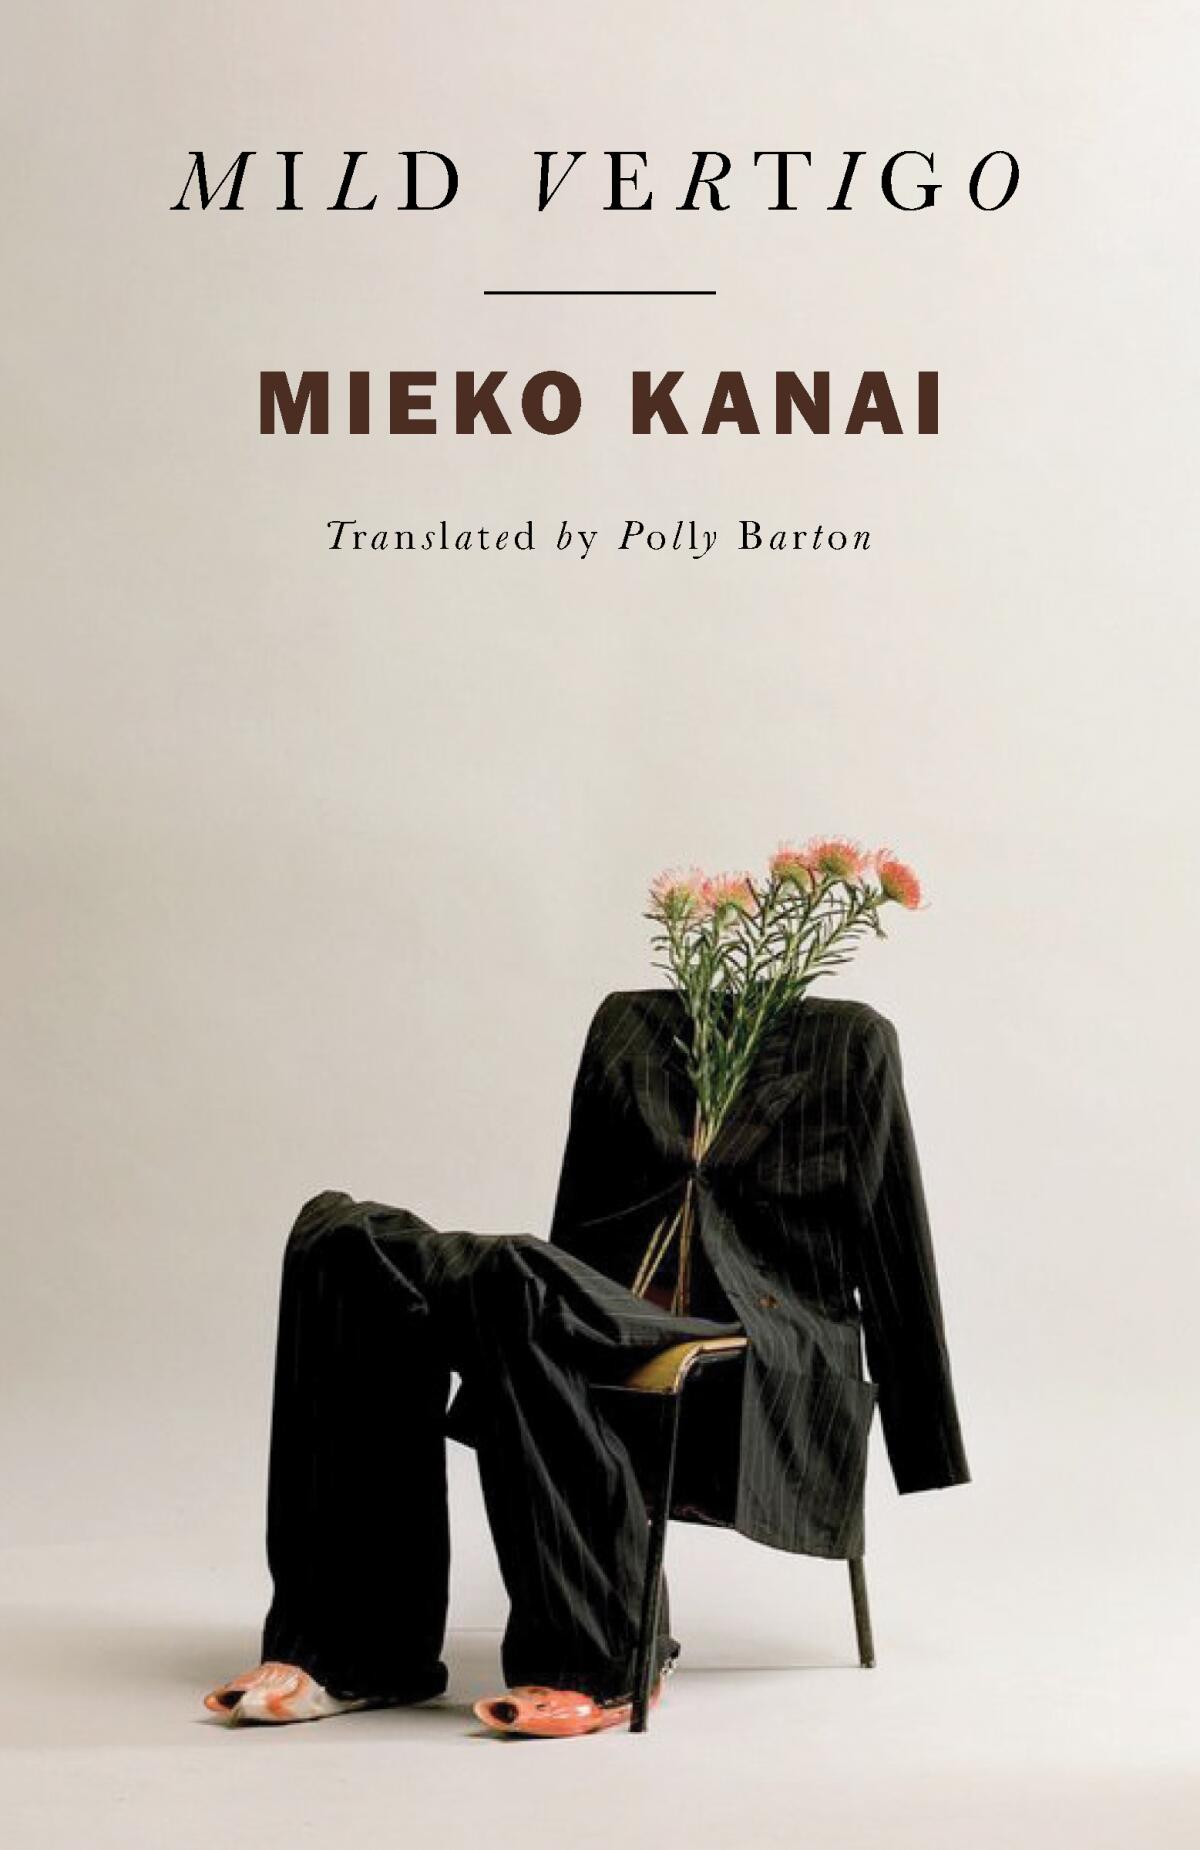 "Mild Vertigo," by Mieko Kanai